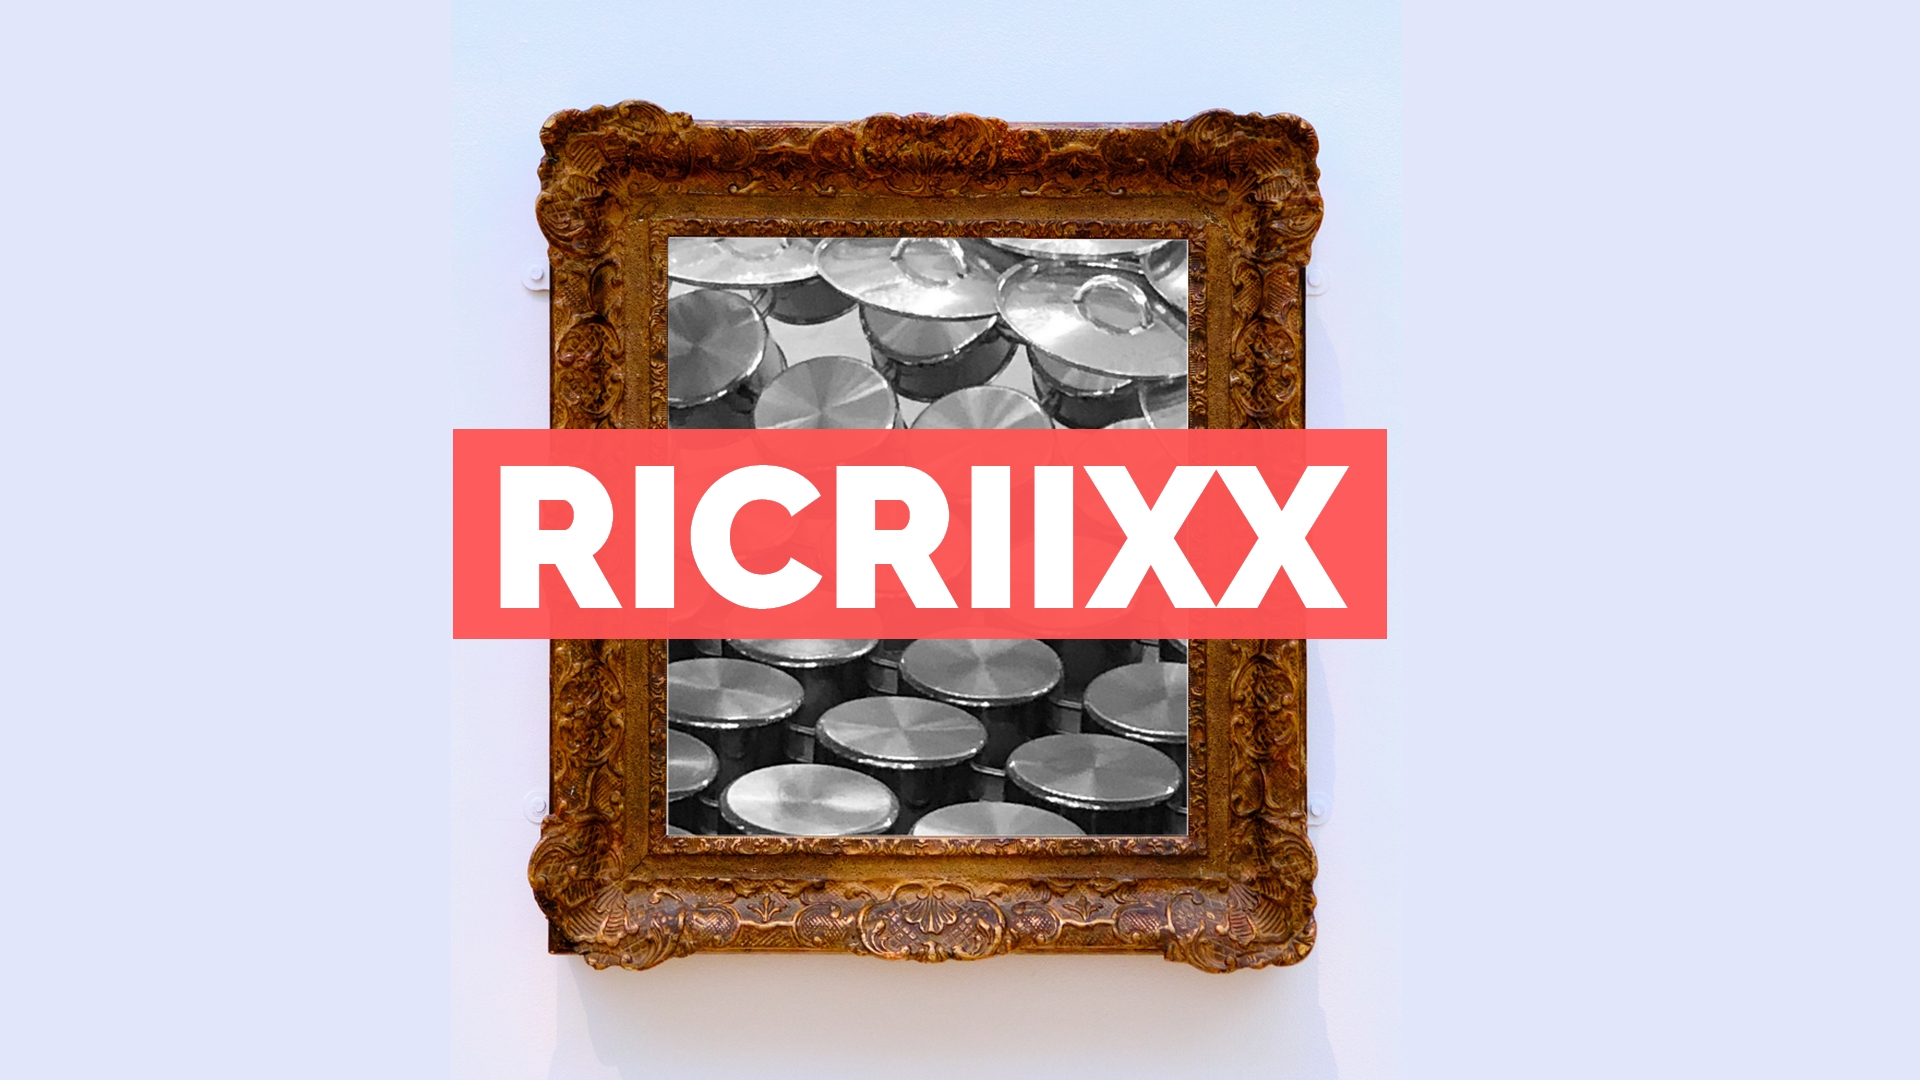 RICRIIXX // PROGRAMMA